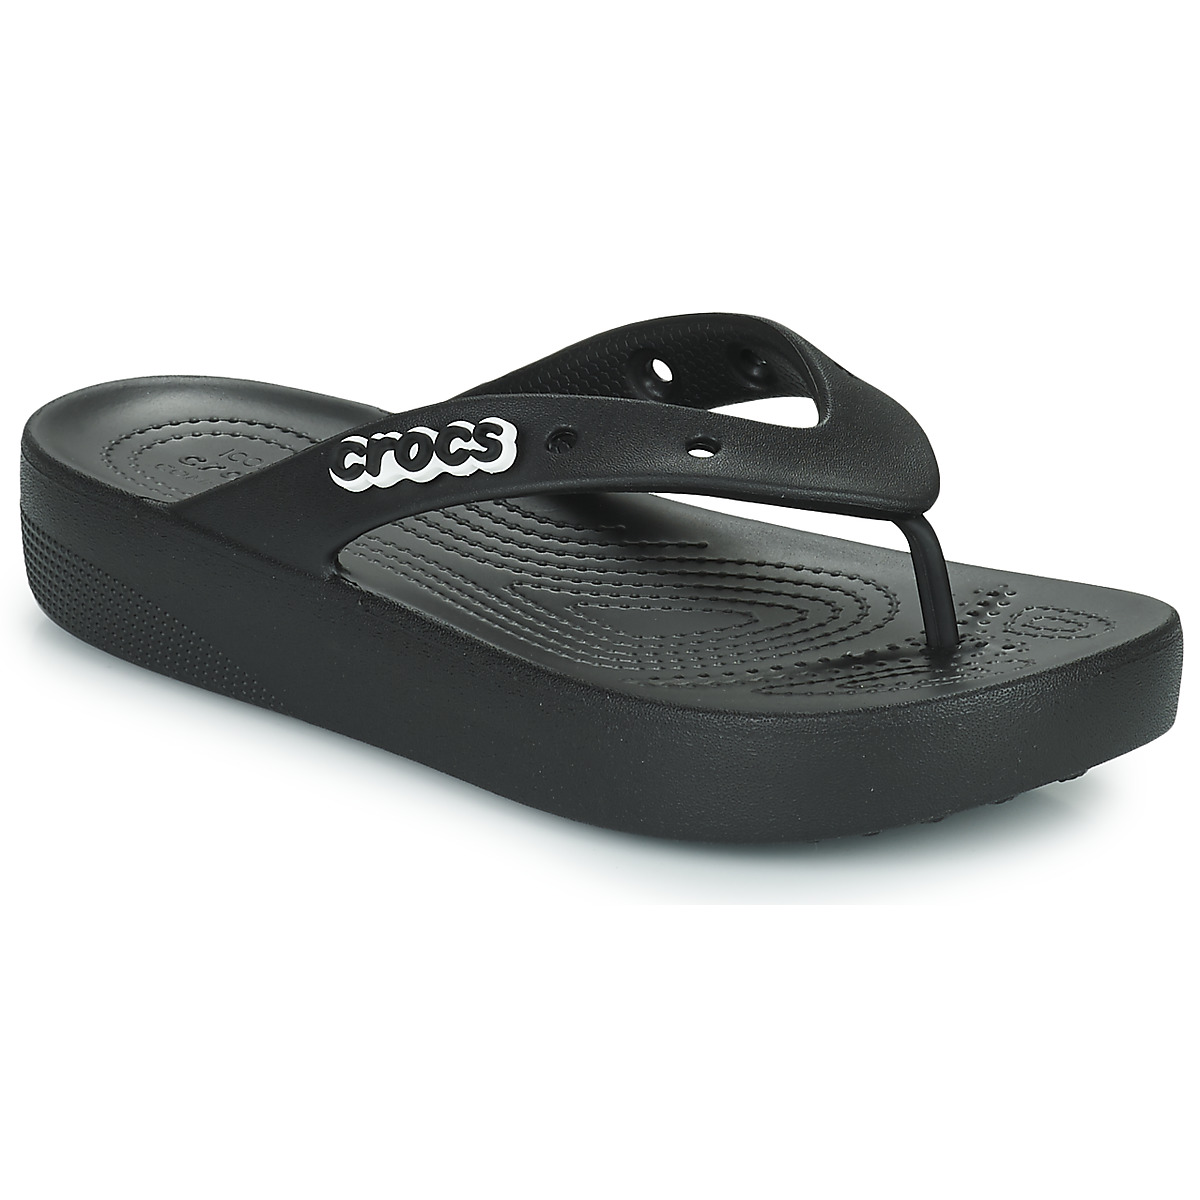 Schoenen Dames Slippers Crocs Classic Platform Flip W Zwart